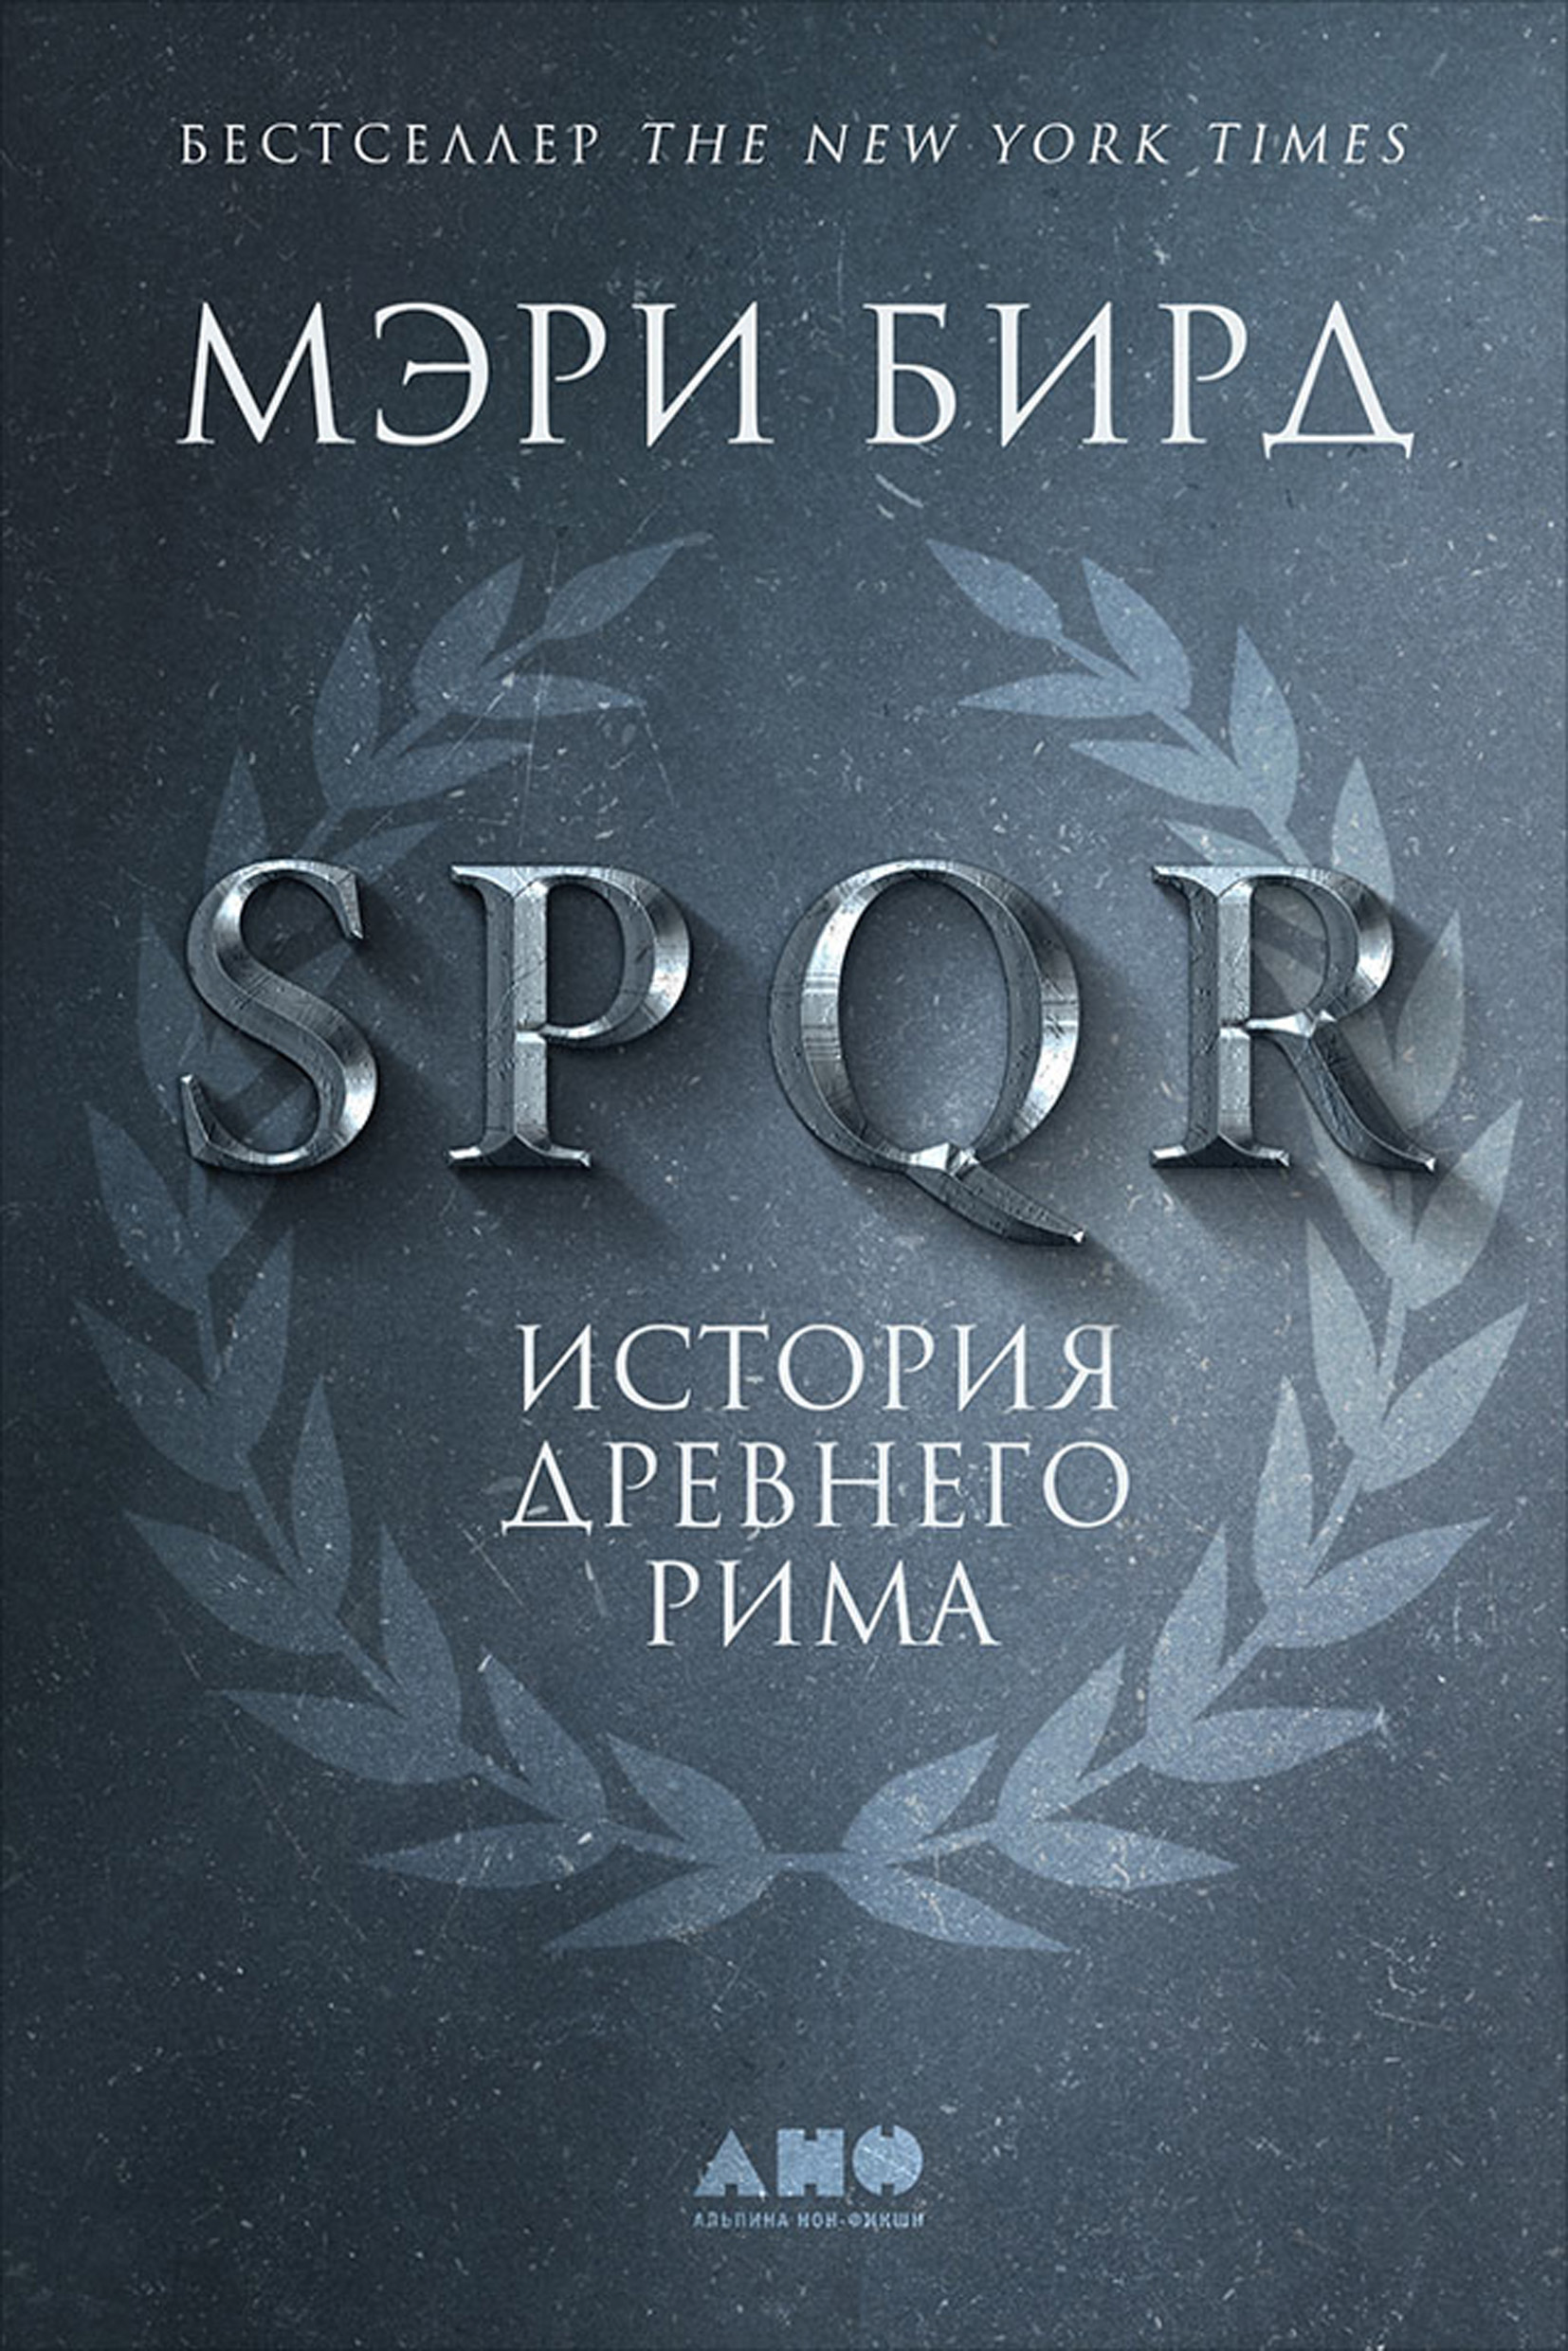 SPQR.История Древнего Рима